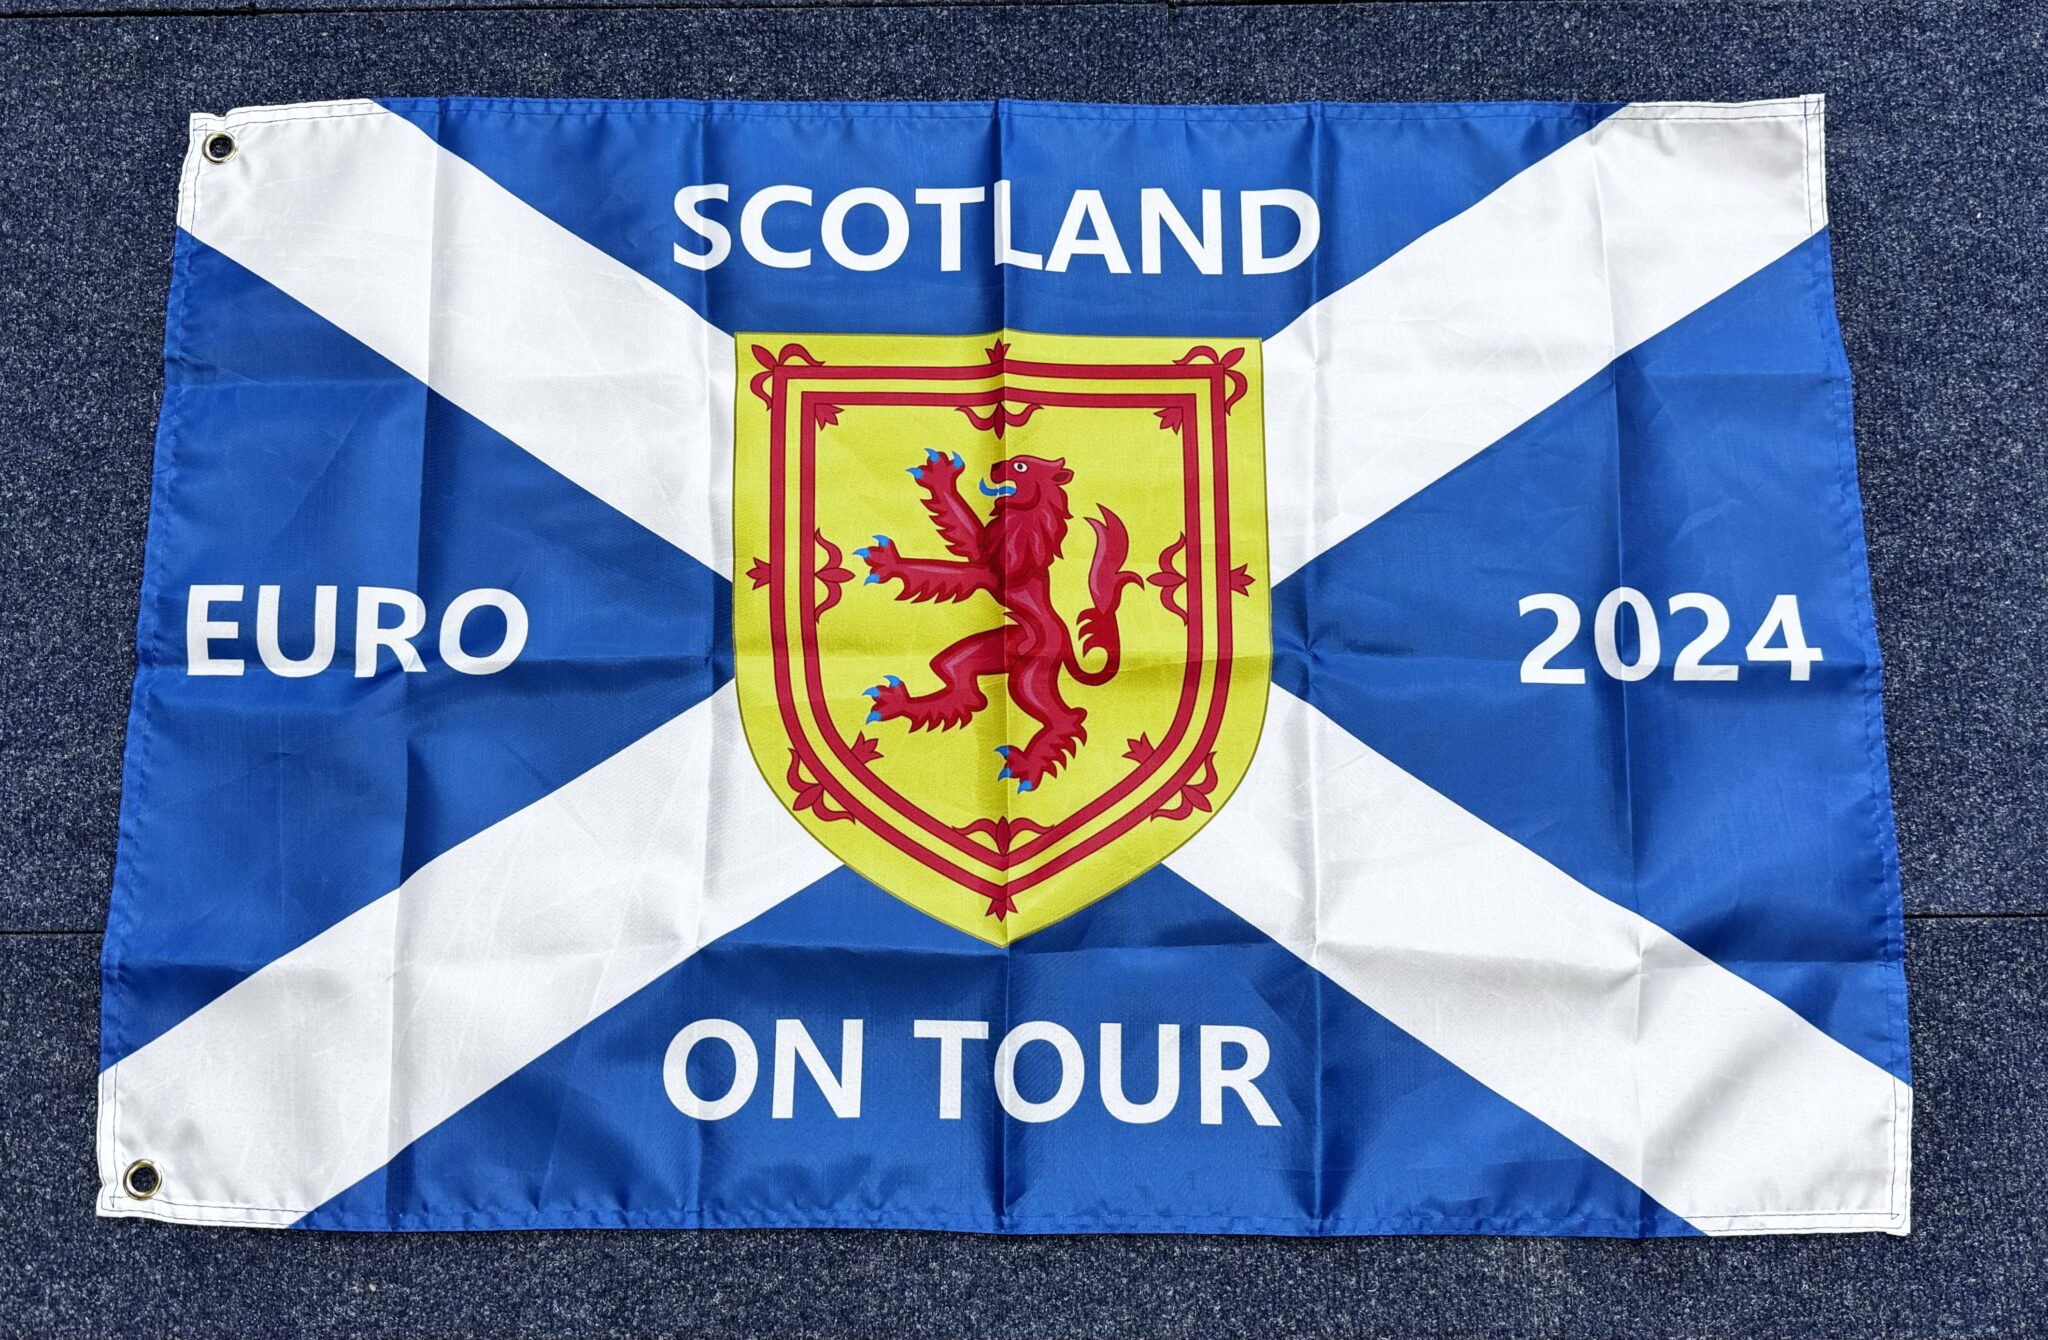 SCOTLAND ON TOUR EURO 2024 FOOTBALL TEAM SUPPORTERS FLAG 3x2 FOOT The